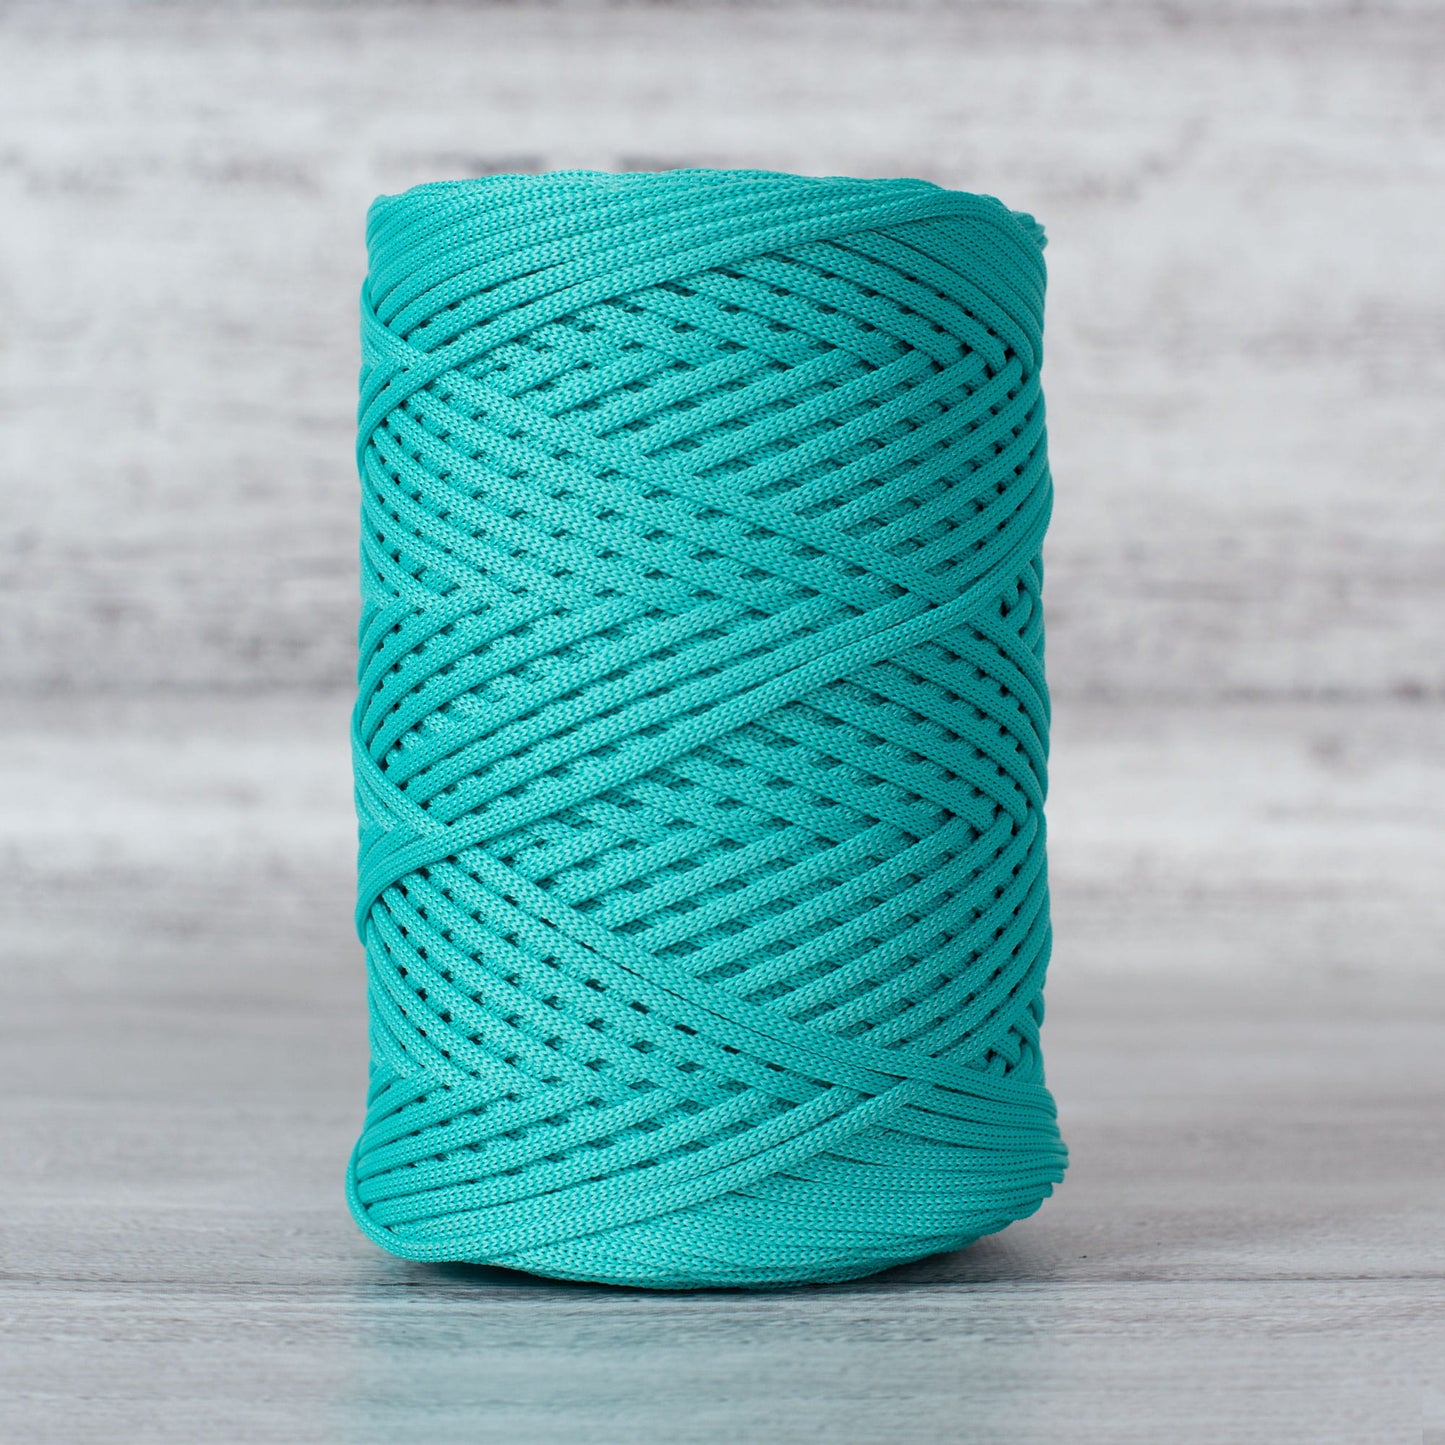 2mm polyester braided cord lightweight radkar handmade craft diy macrame bag